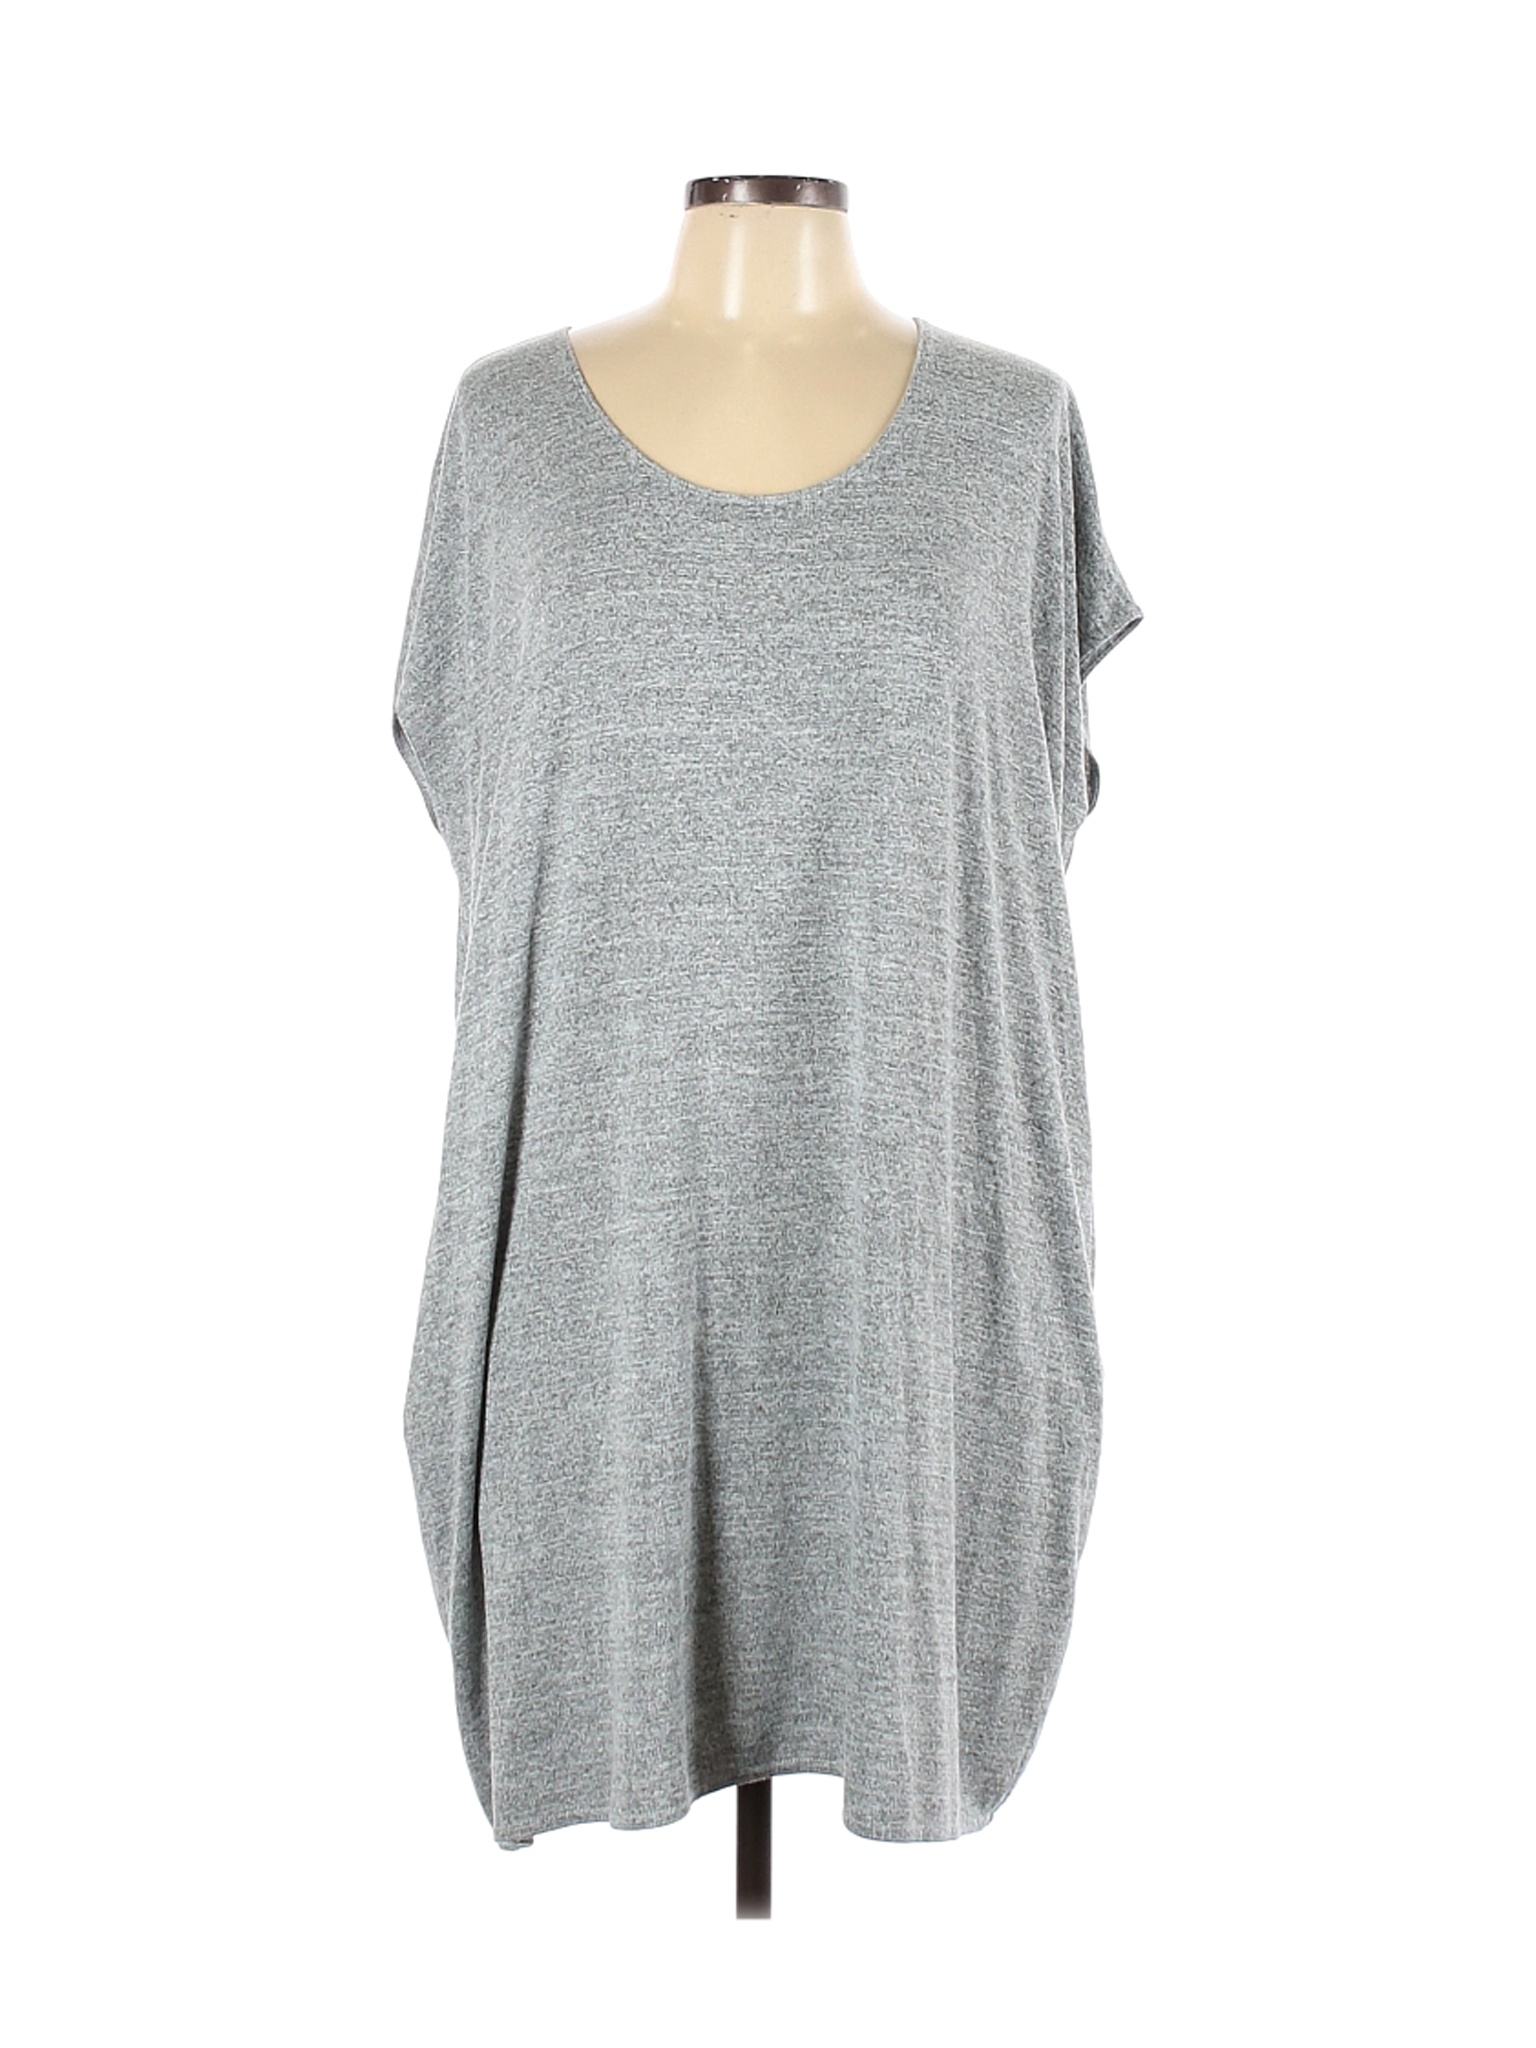 Wilfred Free Women Gray Casual Dress L | eBay